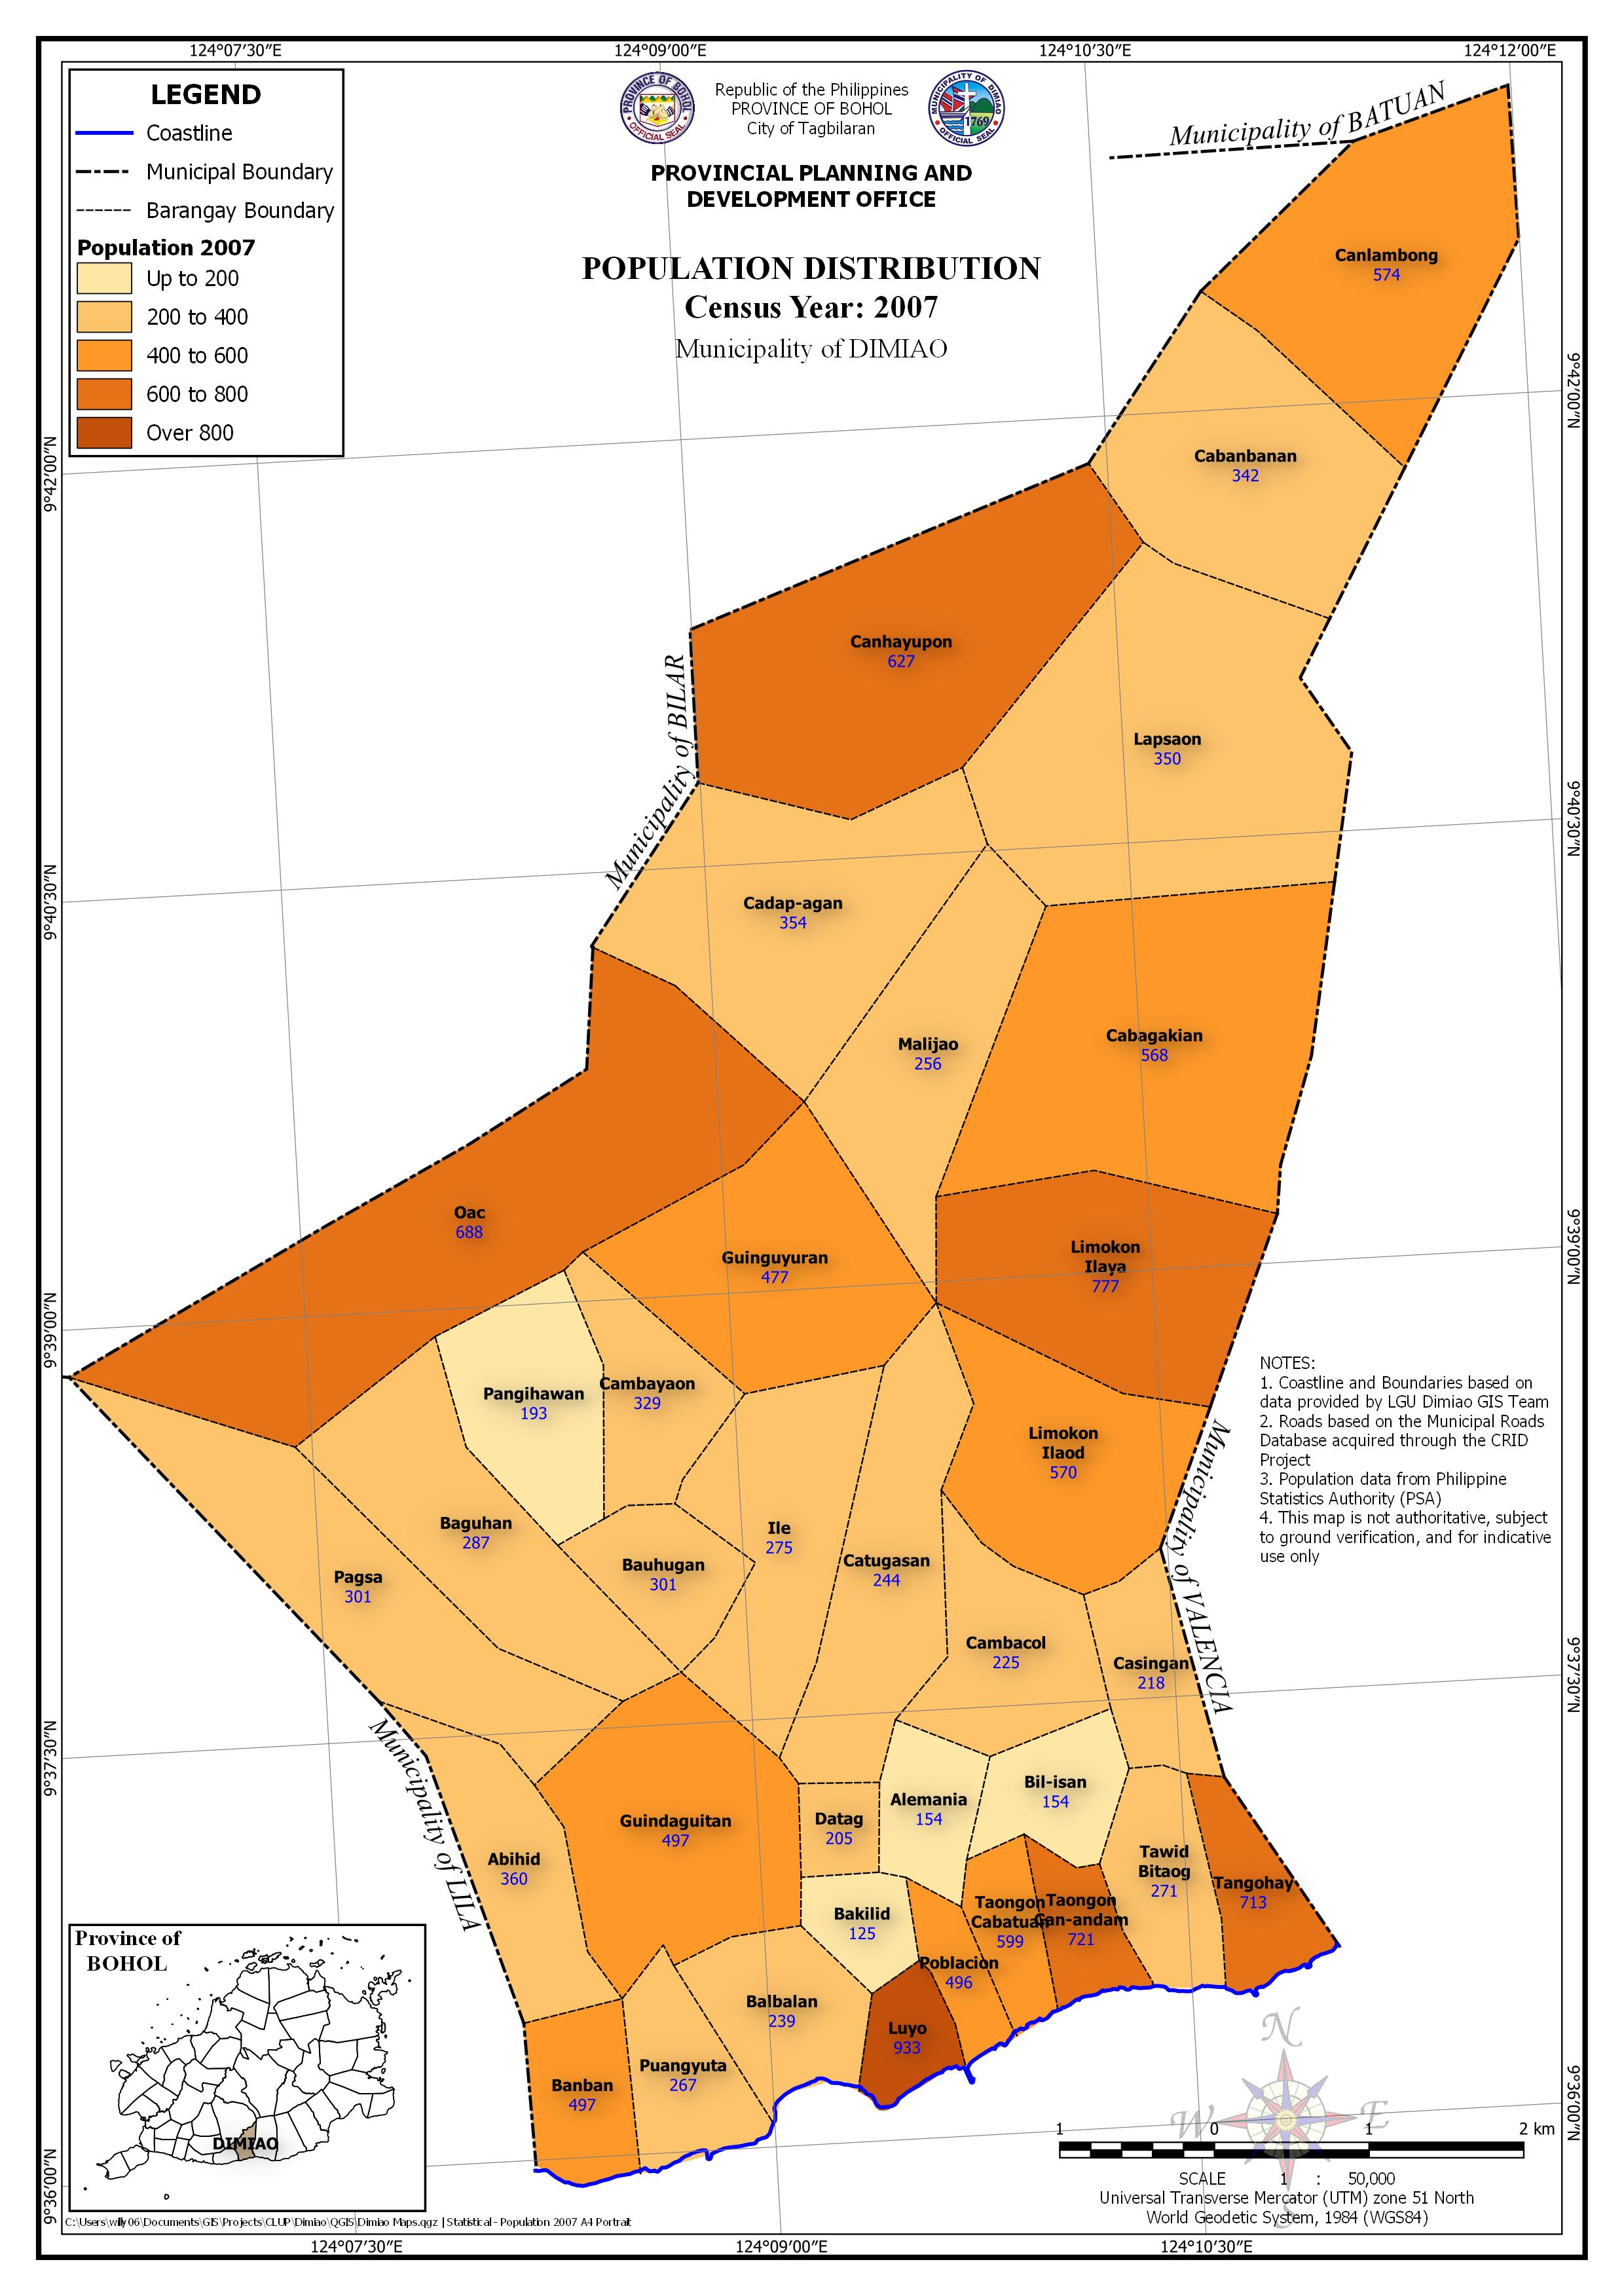 Population Distribution Census Year: 2007